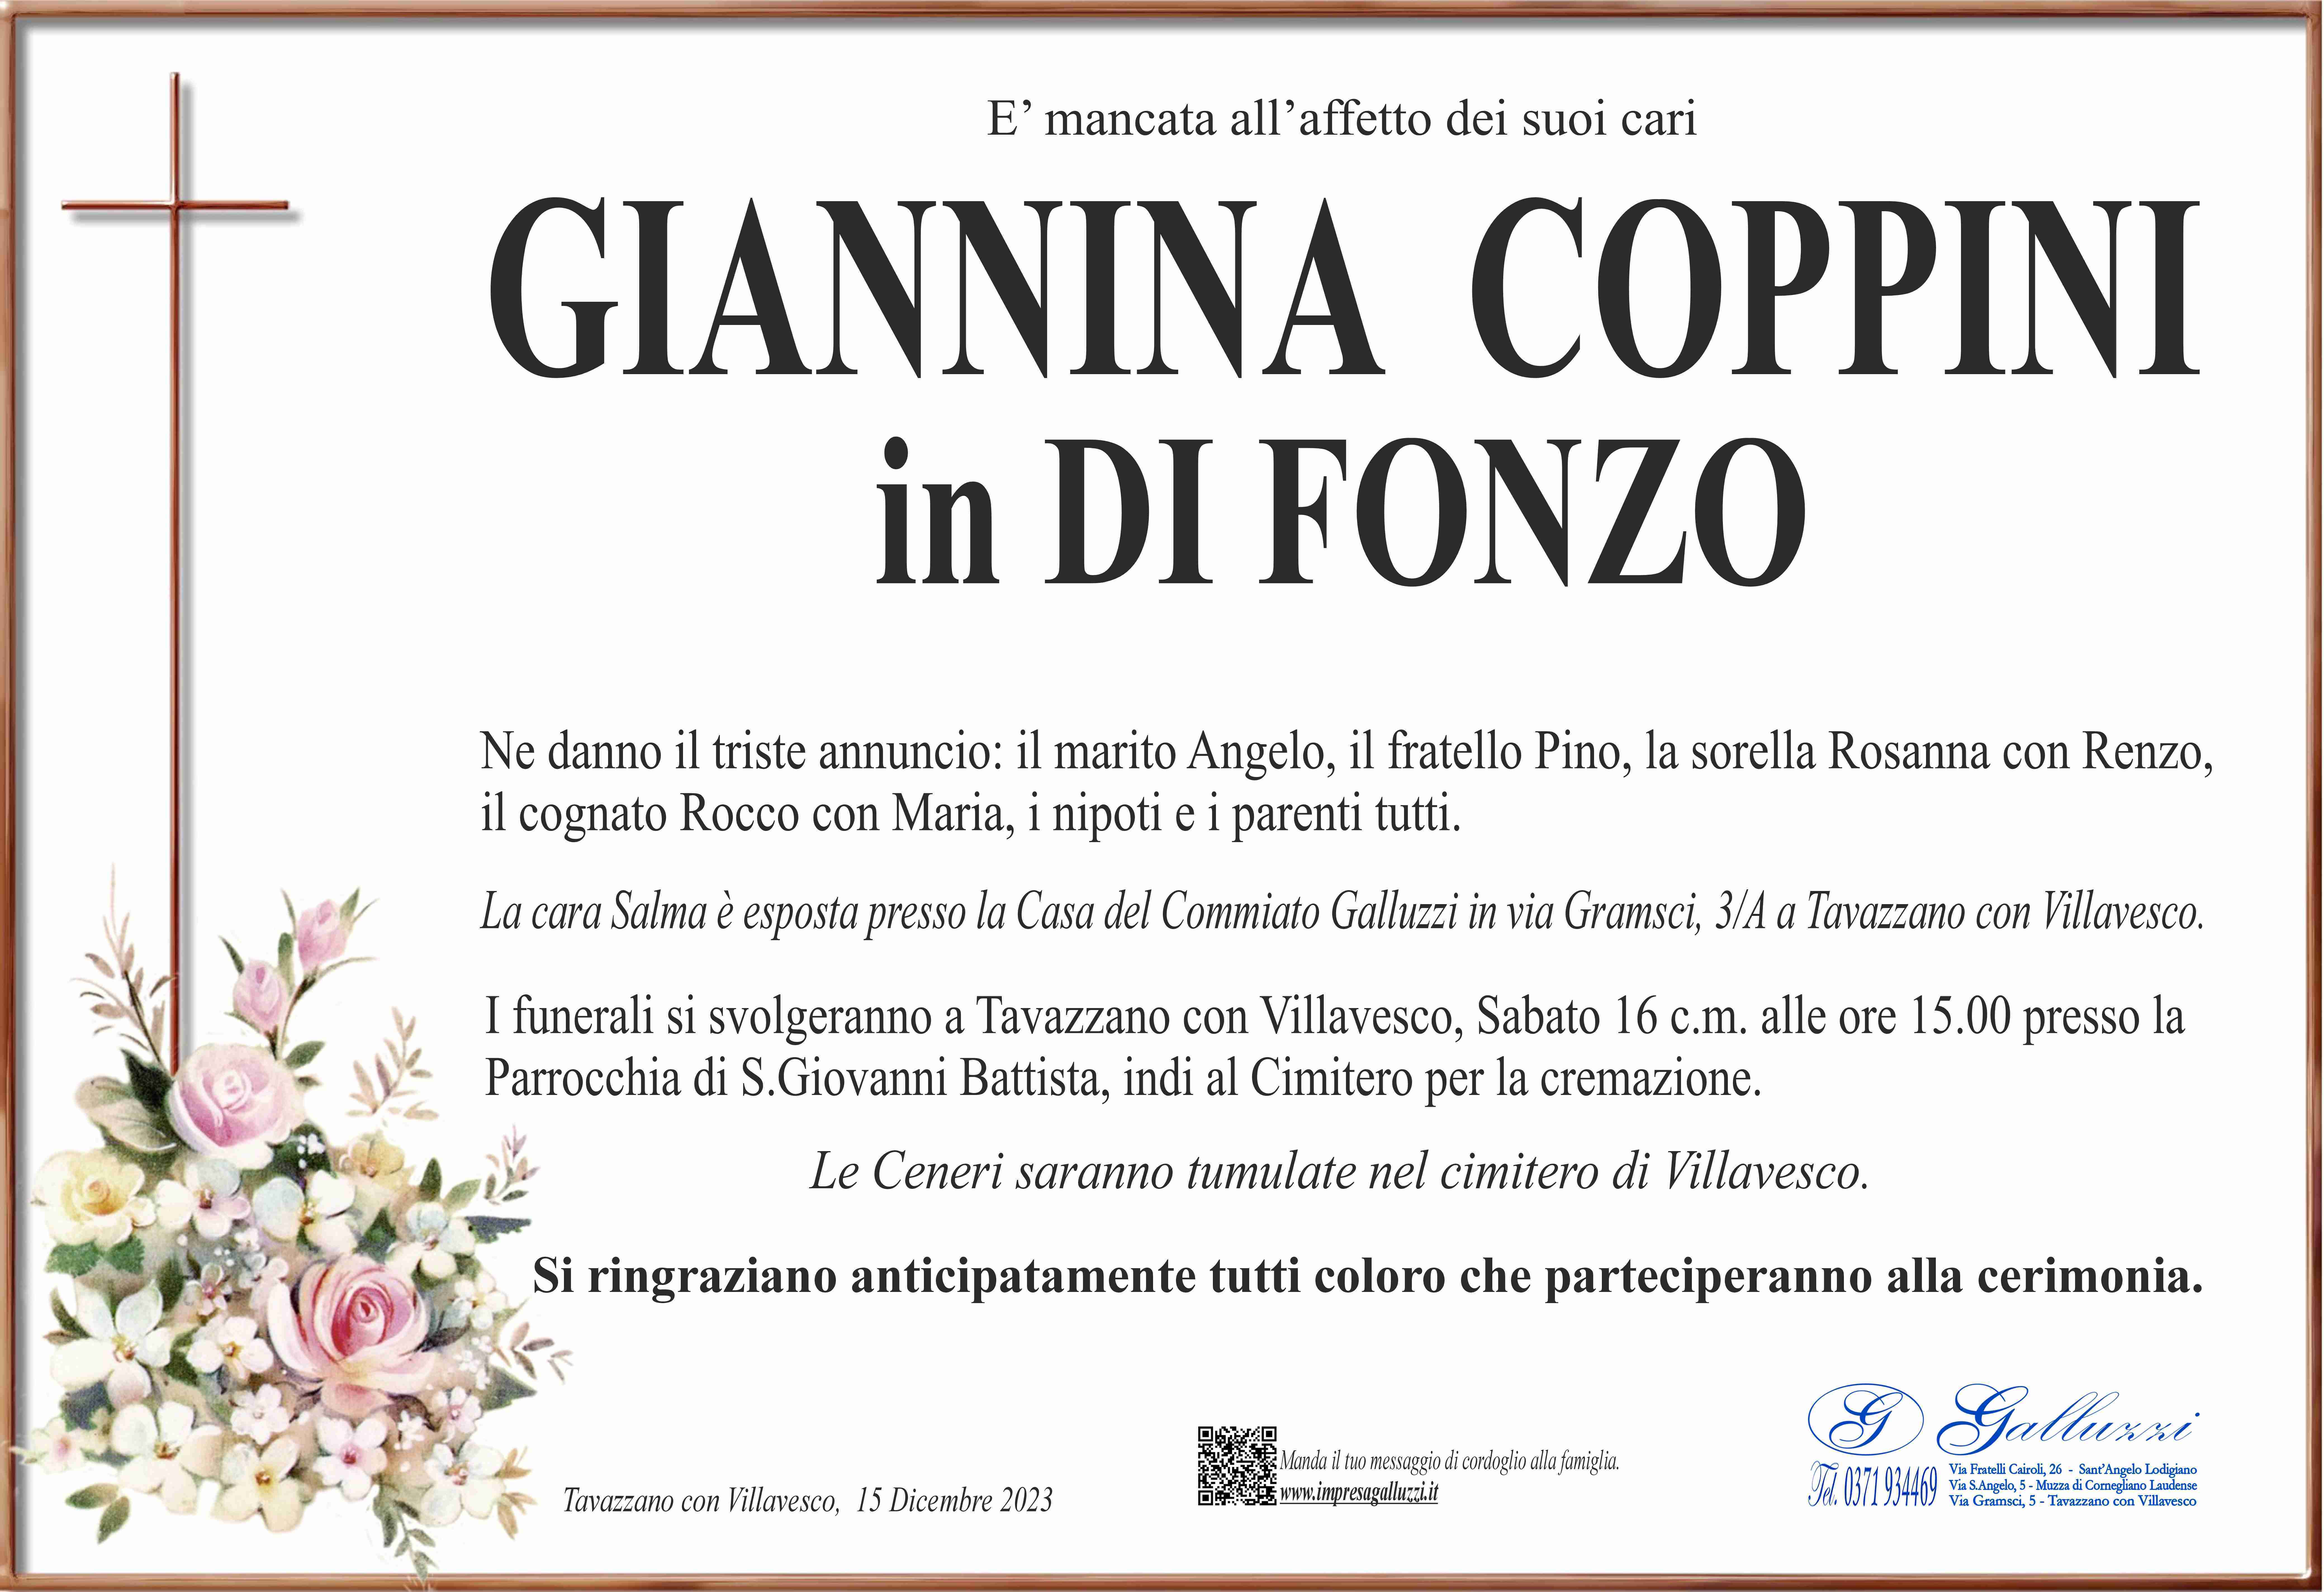 Giannina Coppini